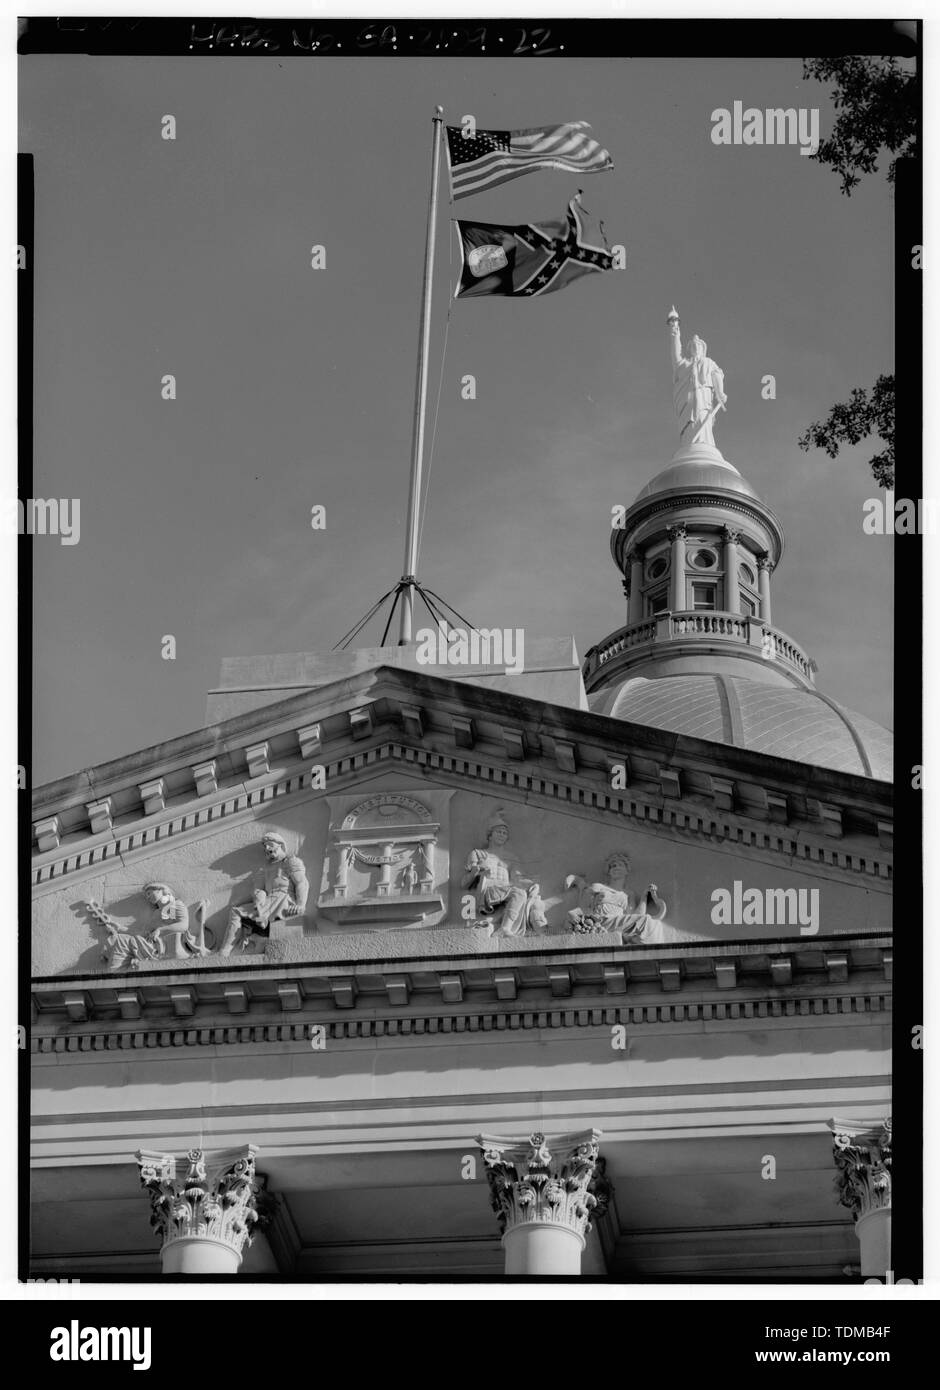 PEDIMENT DETAIL - Georgia State Capitol, Capitol Square, Atlanta, Fulton County, GA Stock Photo